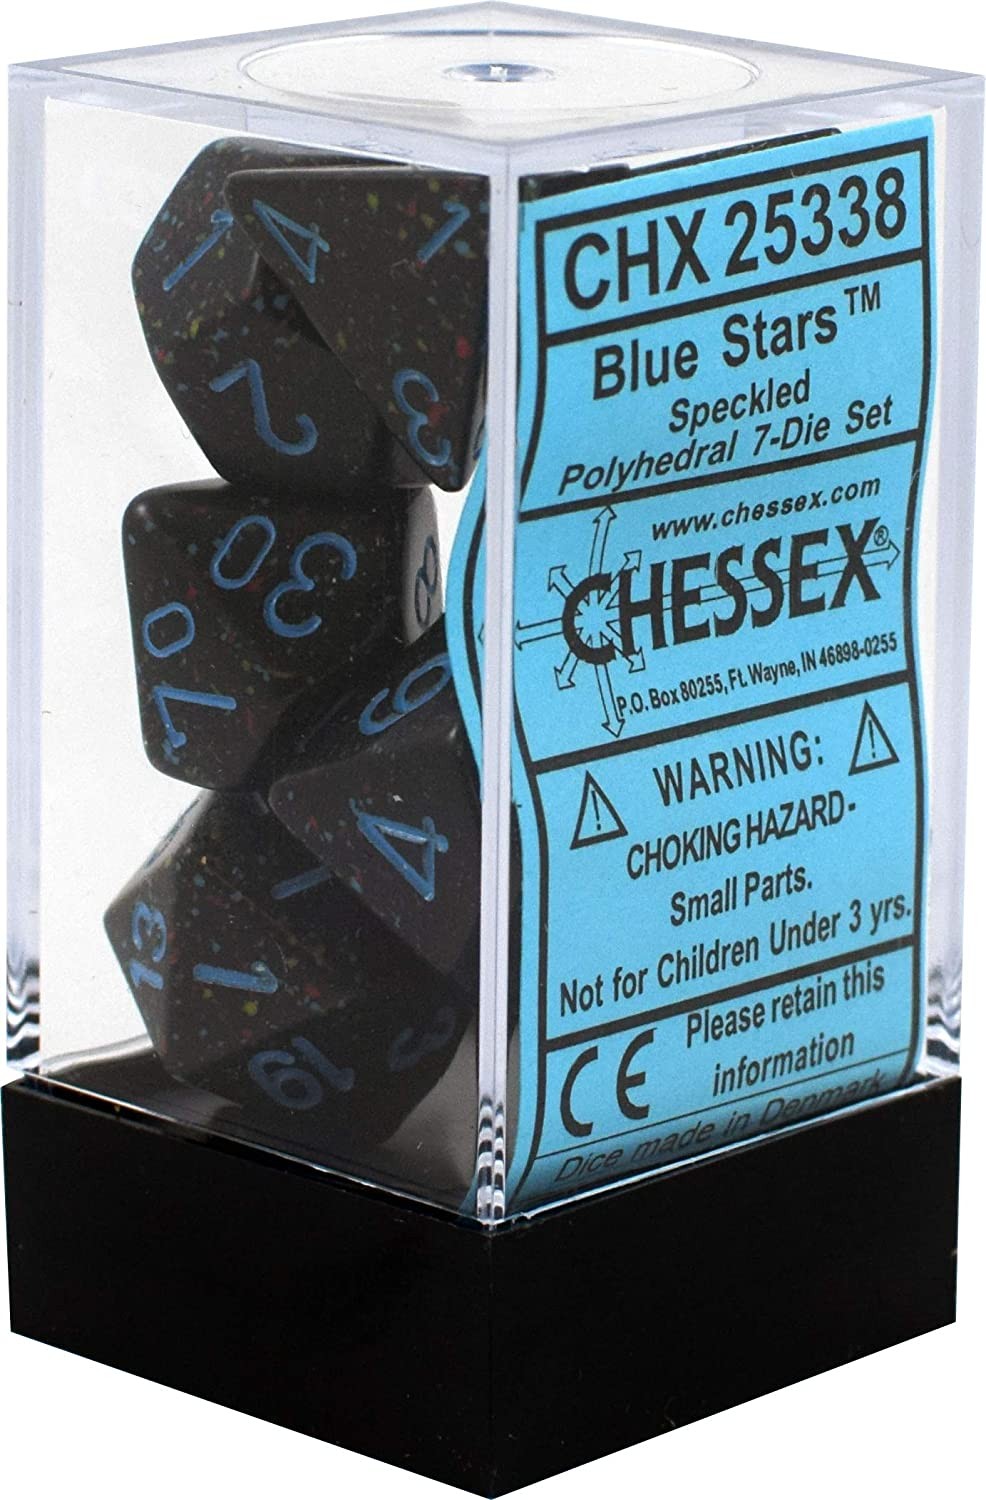 Polyhedral Dice Set: Speckled 7-Piece Set (box) - Blue Stars